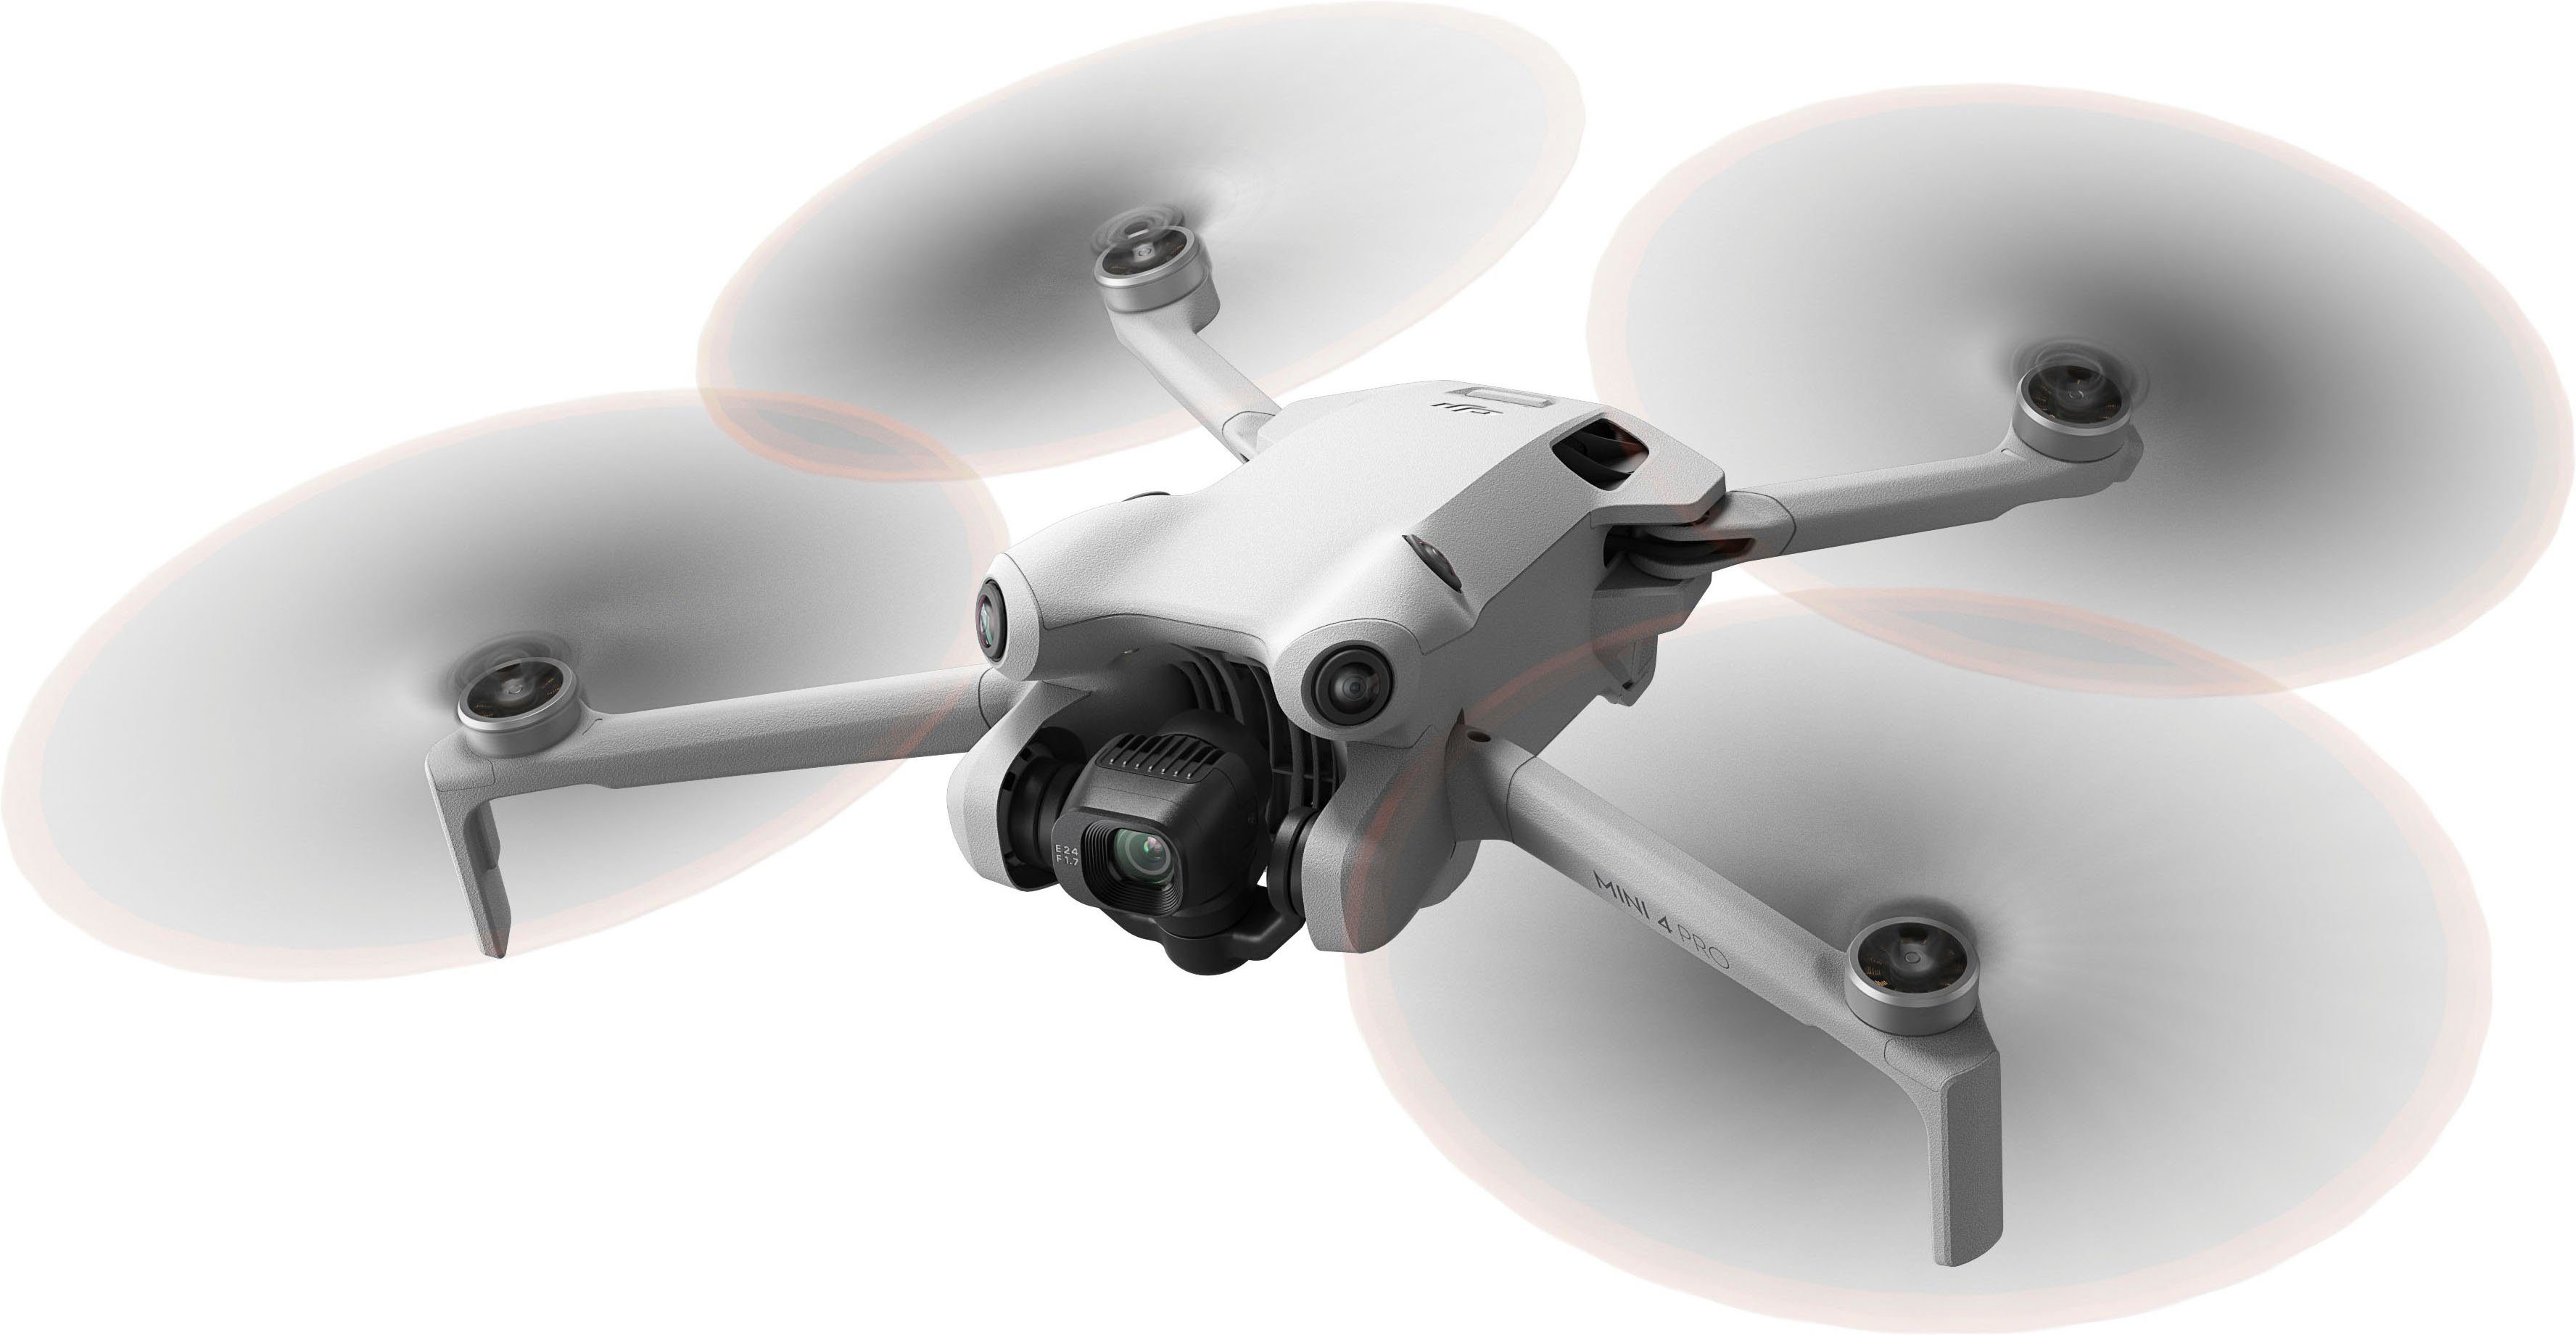 More (GL) 4 RC Mini (DJI Fly 2) Drohne DJI Pro HD) Ultra (4K Combo